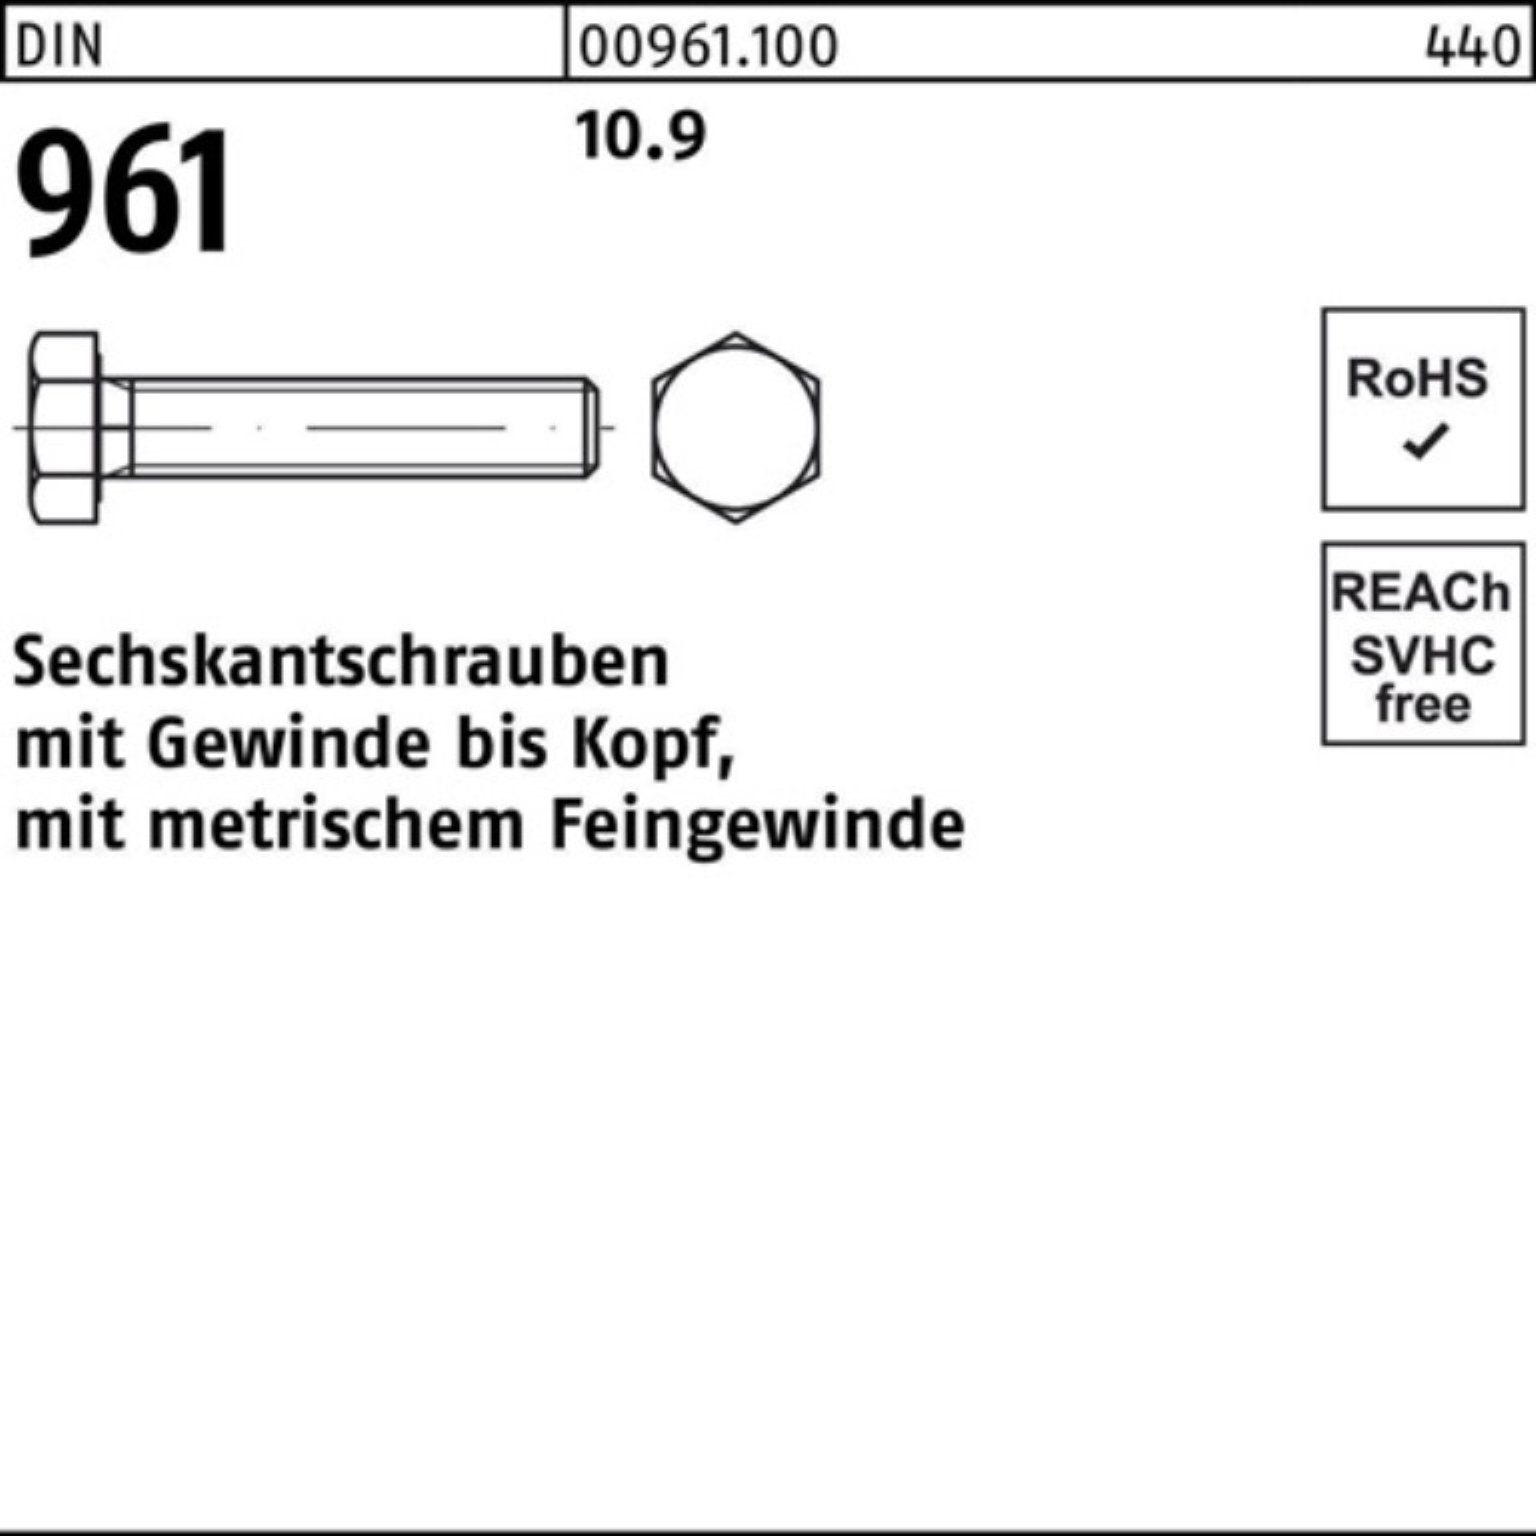 Reyher Sechskantschraube 100er 961 Stück DI 40 10.9 VG 100 Pack DIN Sechskantschraube M12x1,5x